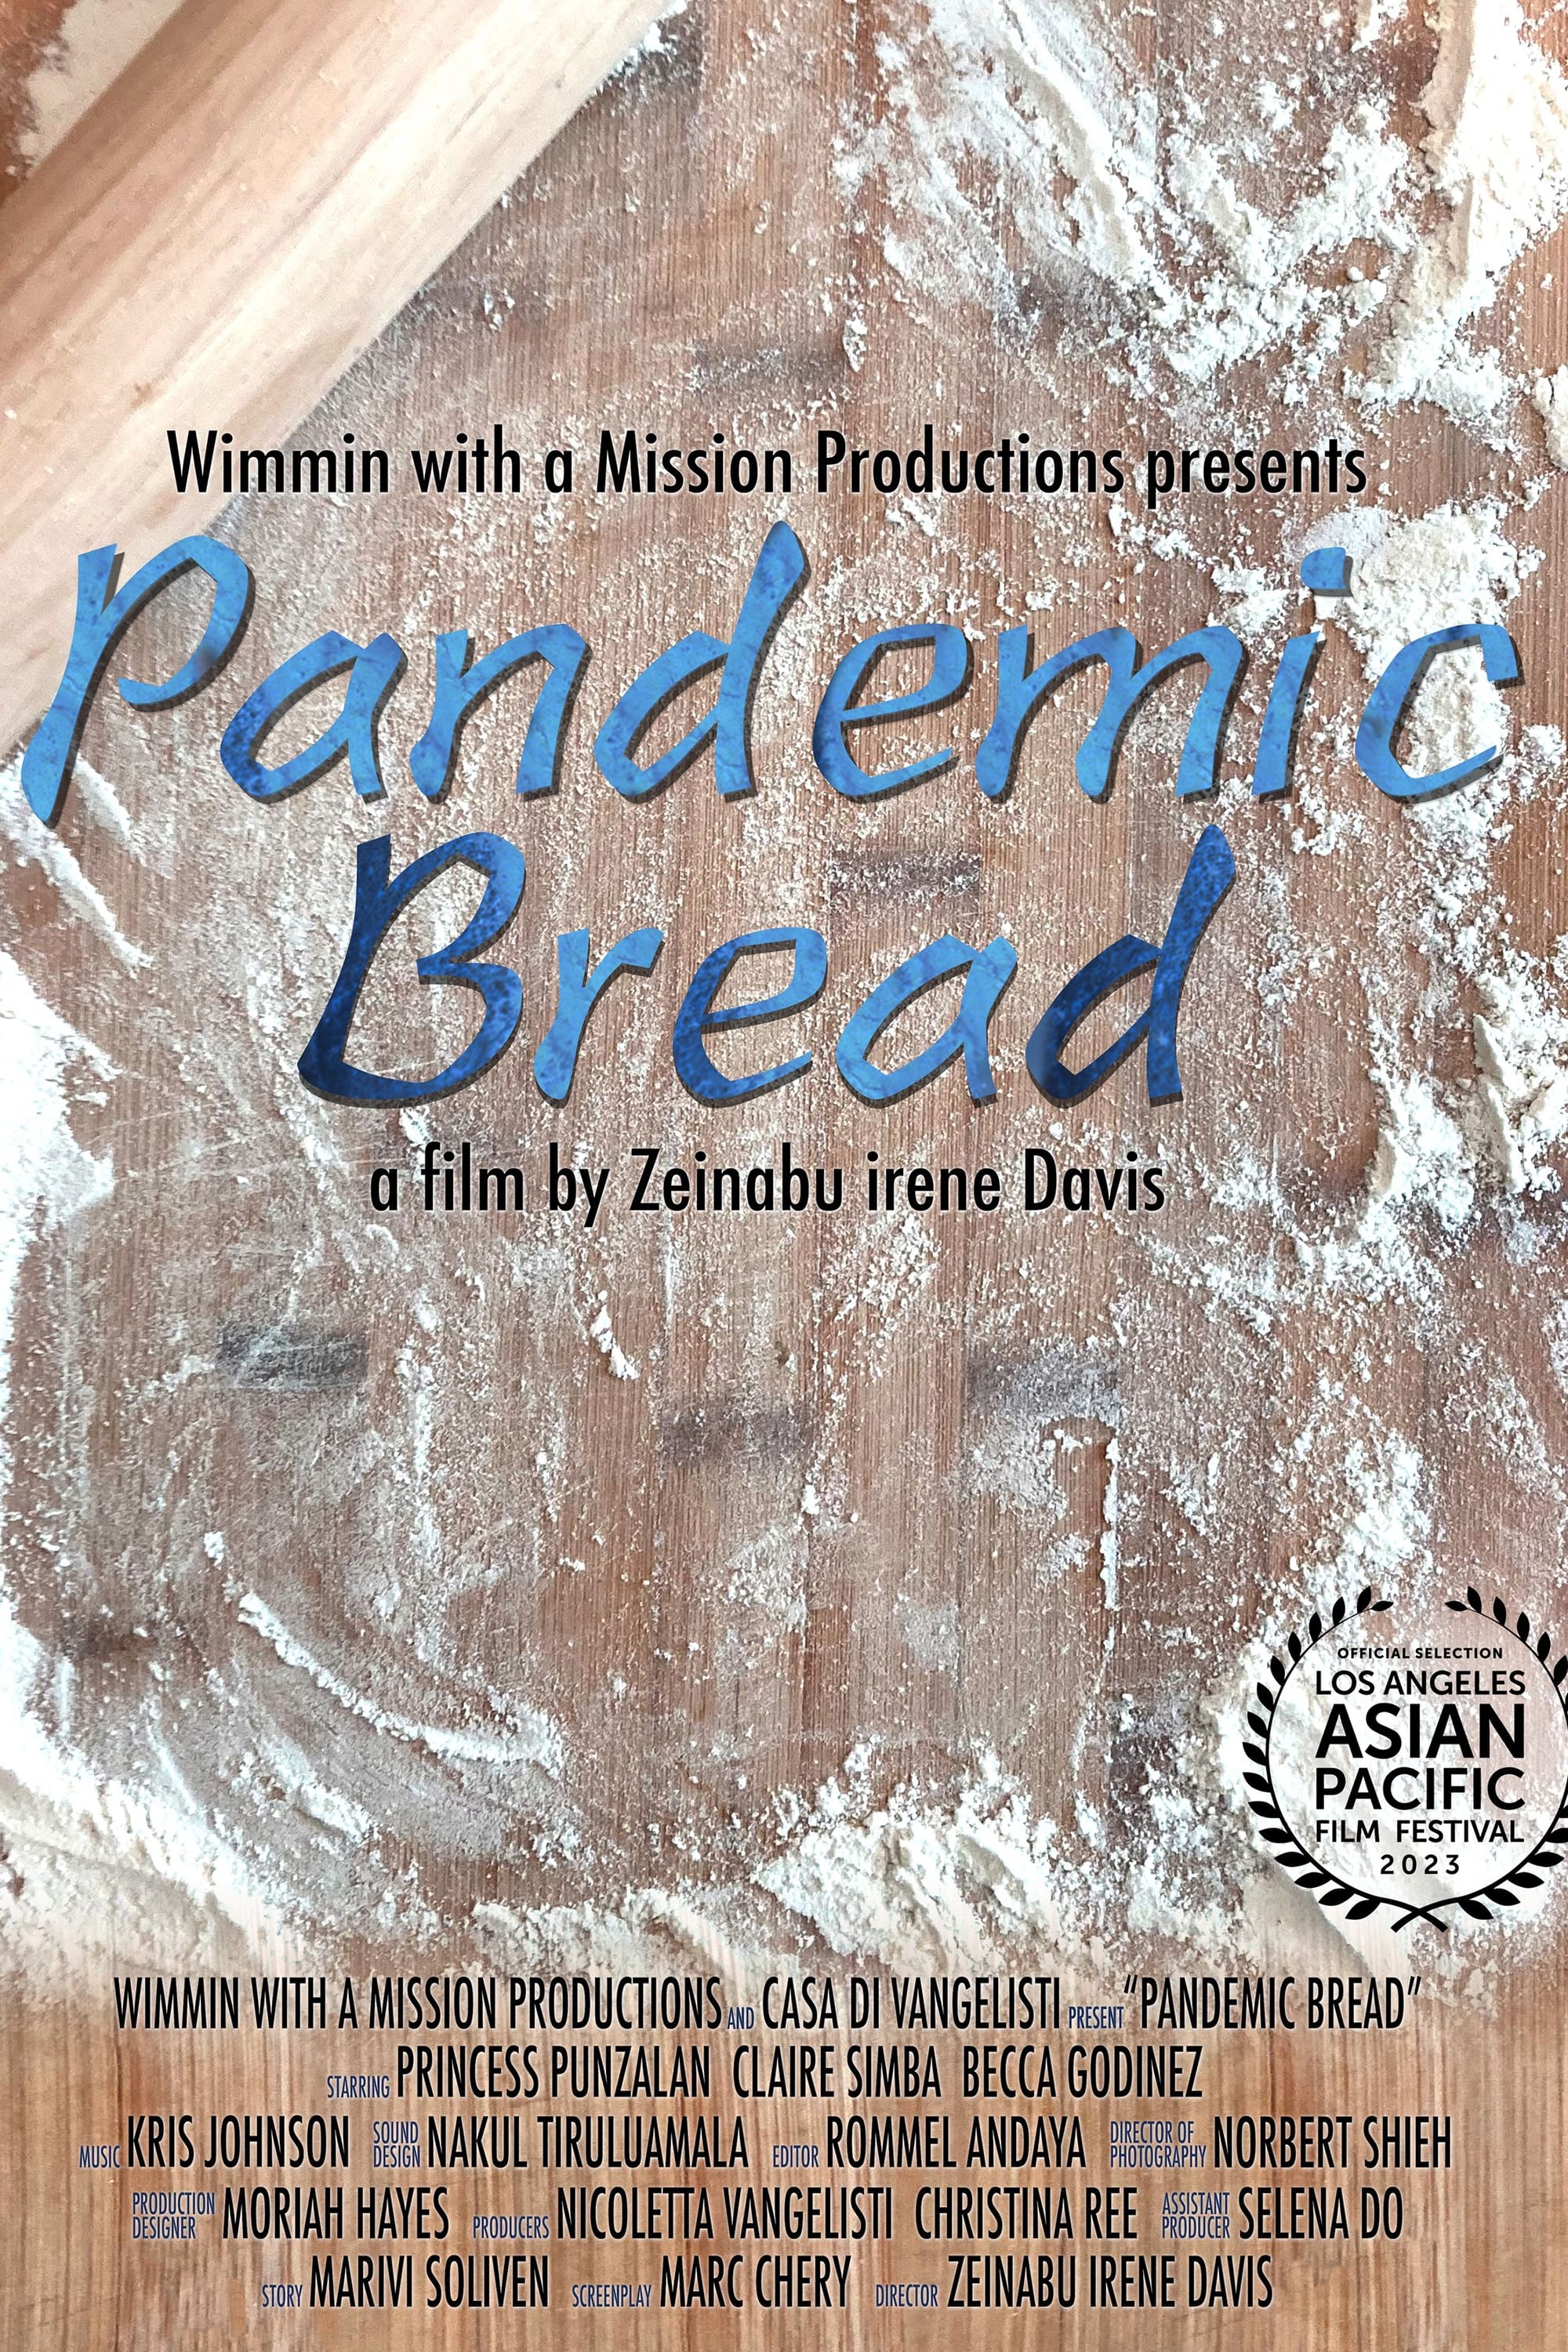 Pandemic Bread